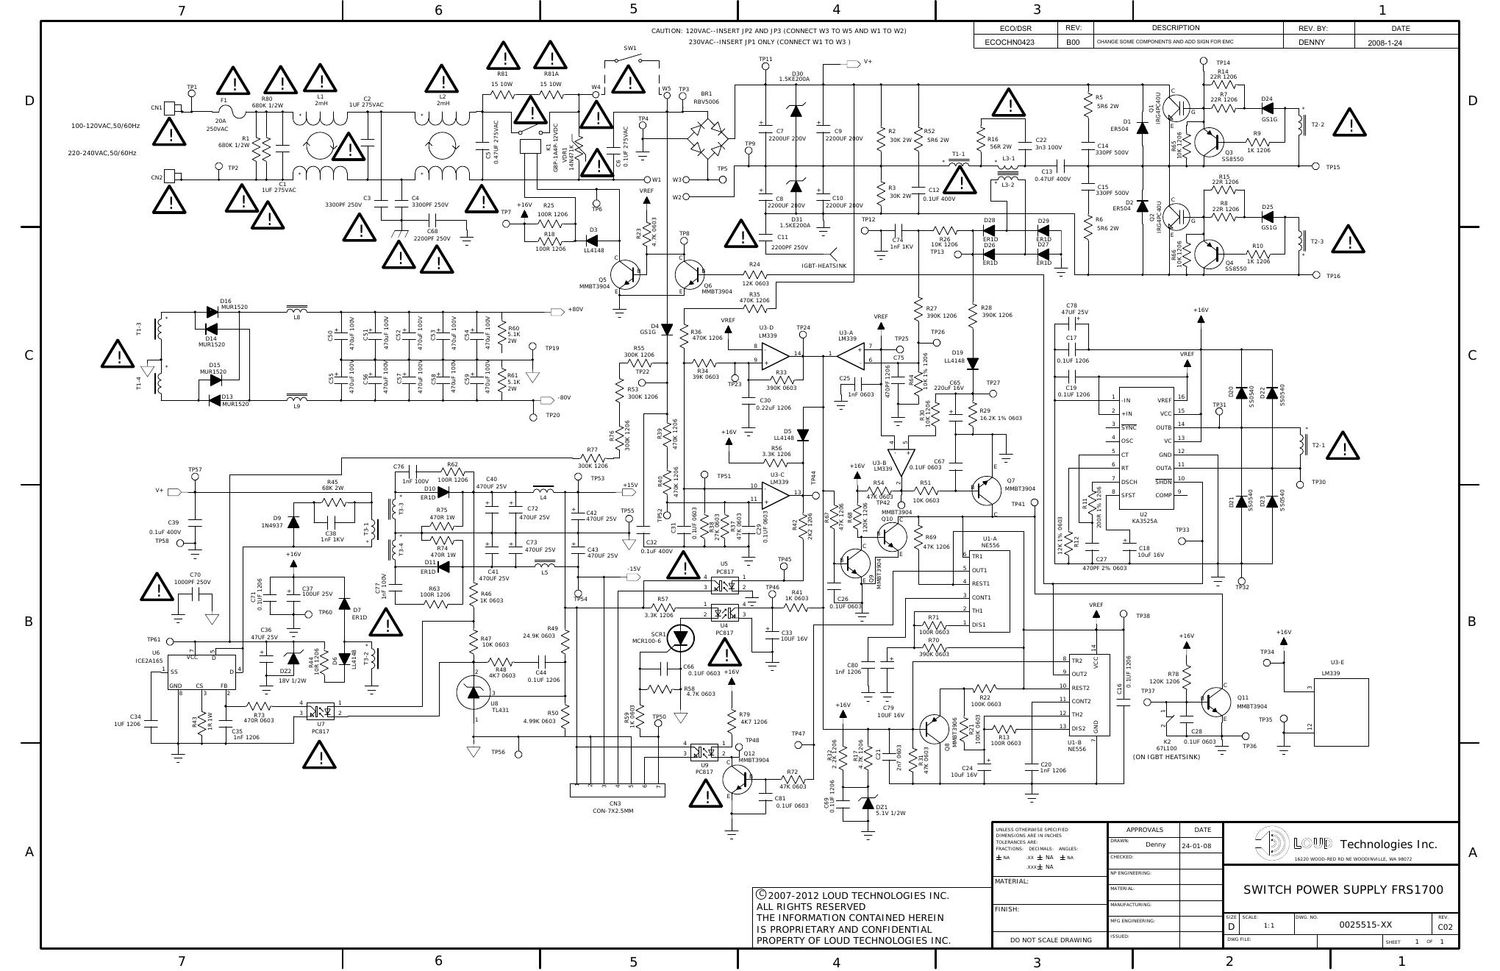 Mackie FRS1700 Power Supply Schematic